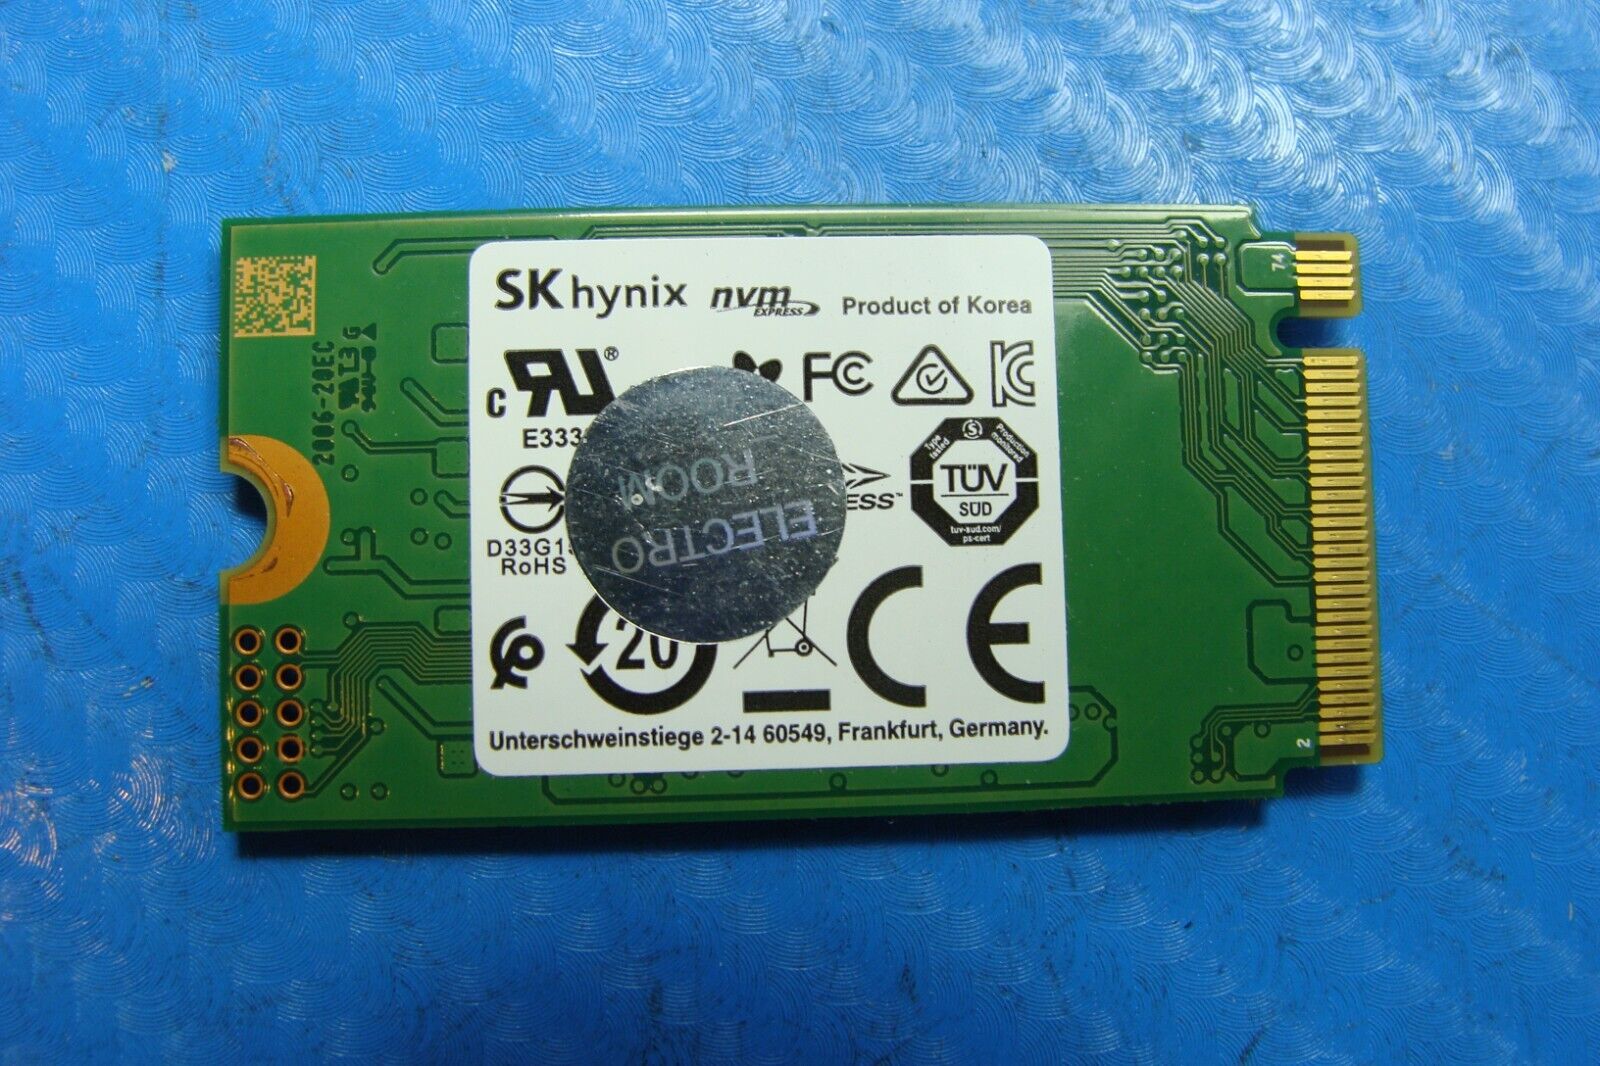 Lenovo 15IIL05 SK hynix 256GB NVMe M.2 SSD Solid State Drive HFM256GDHTNI-87A0B